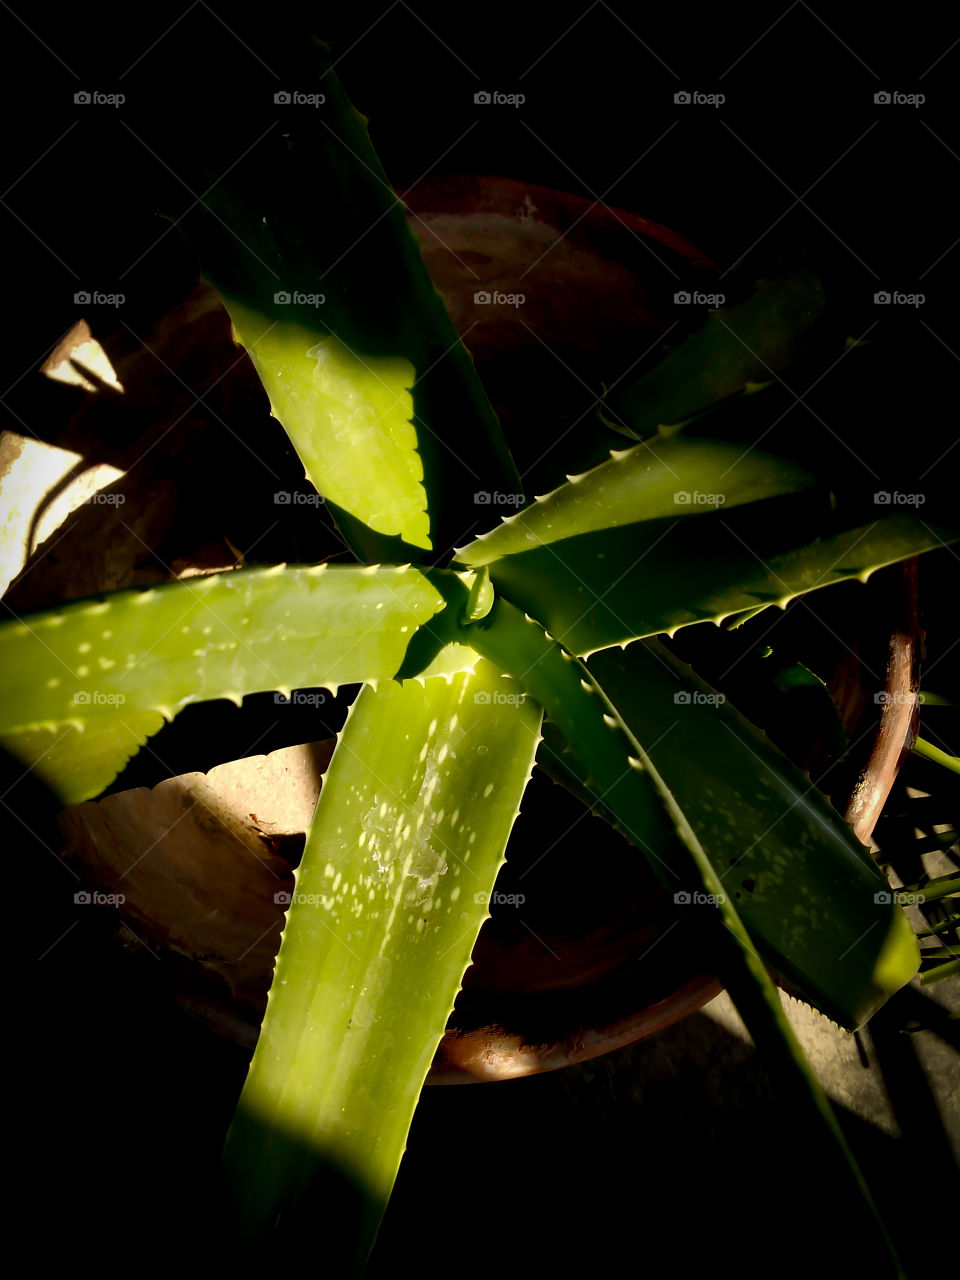 Title- Spreading Memories
Description- Sunlight on Aloe vera Plant
Location- West Bengal,India